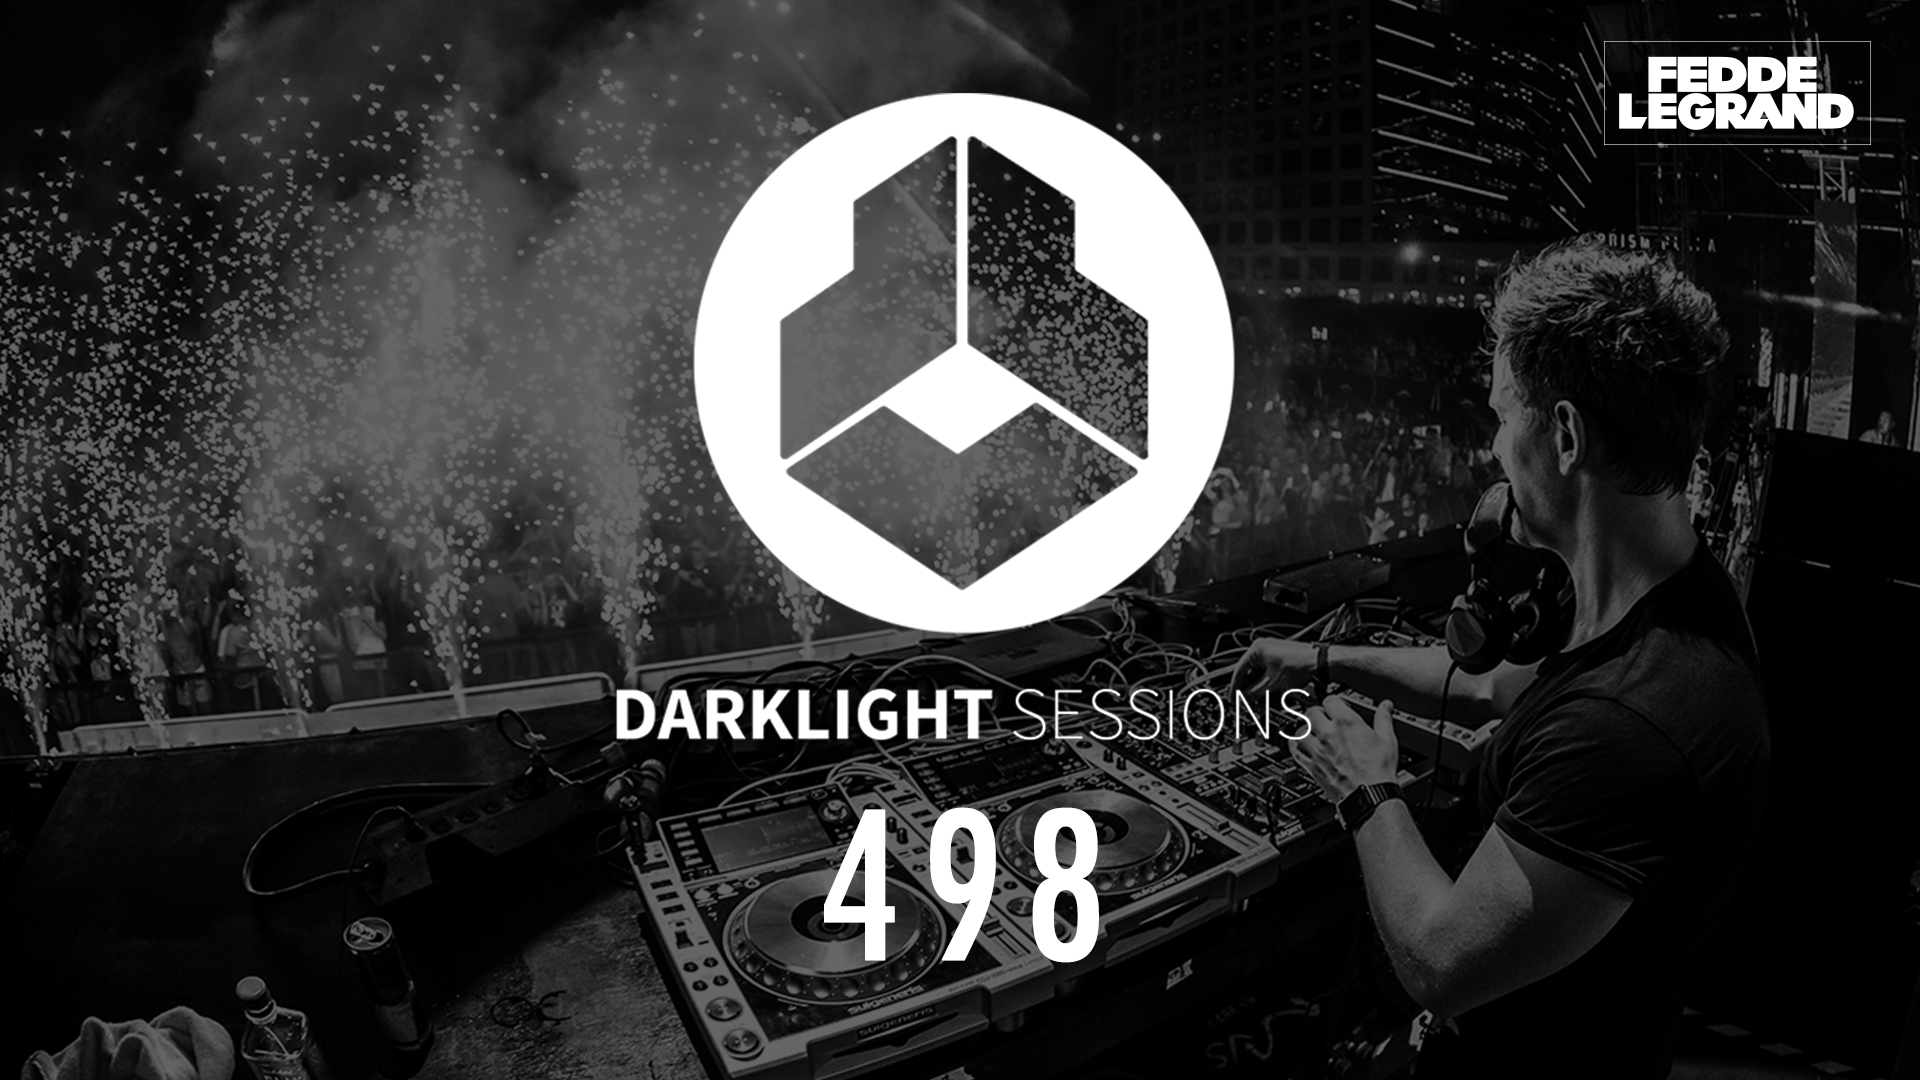 Darklight Sessions 498